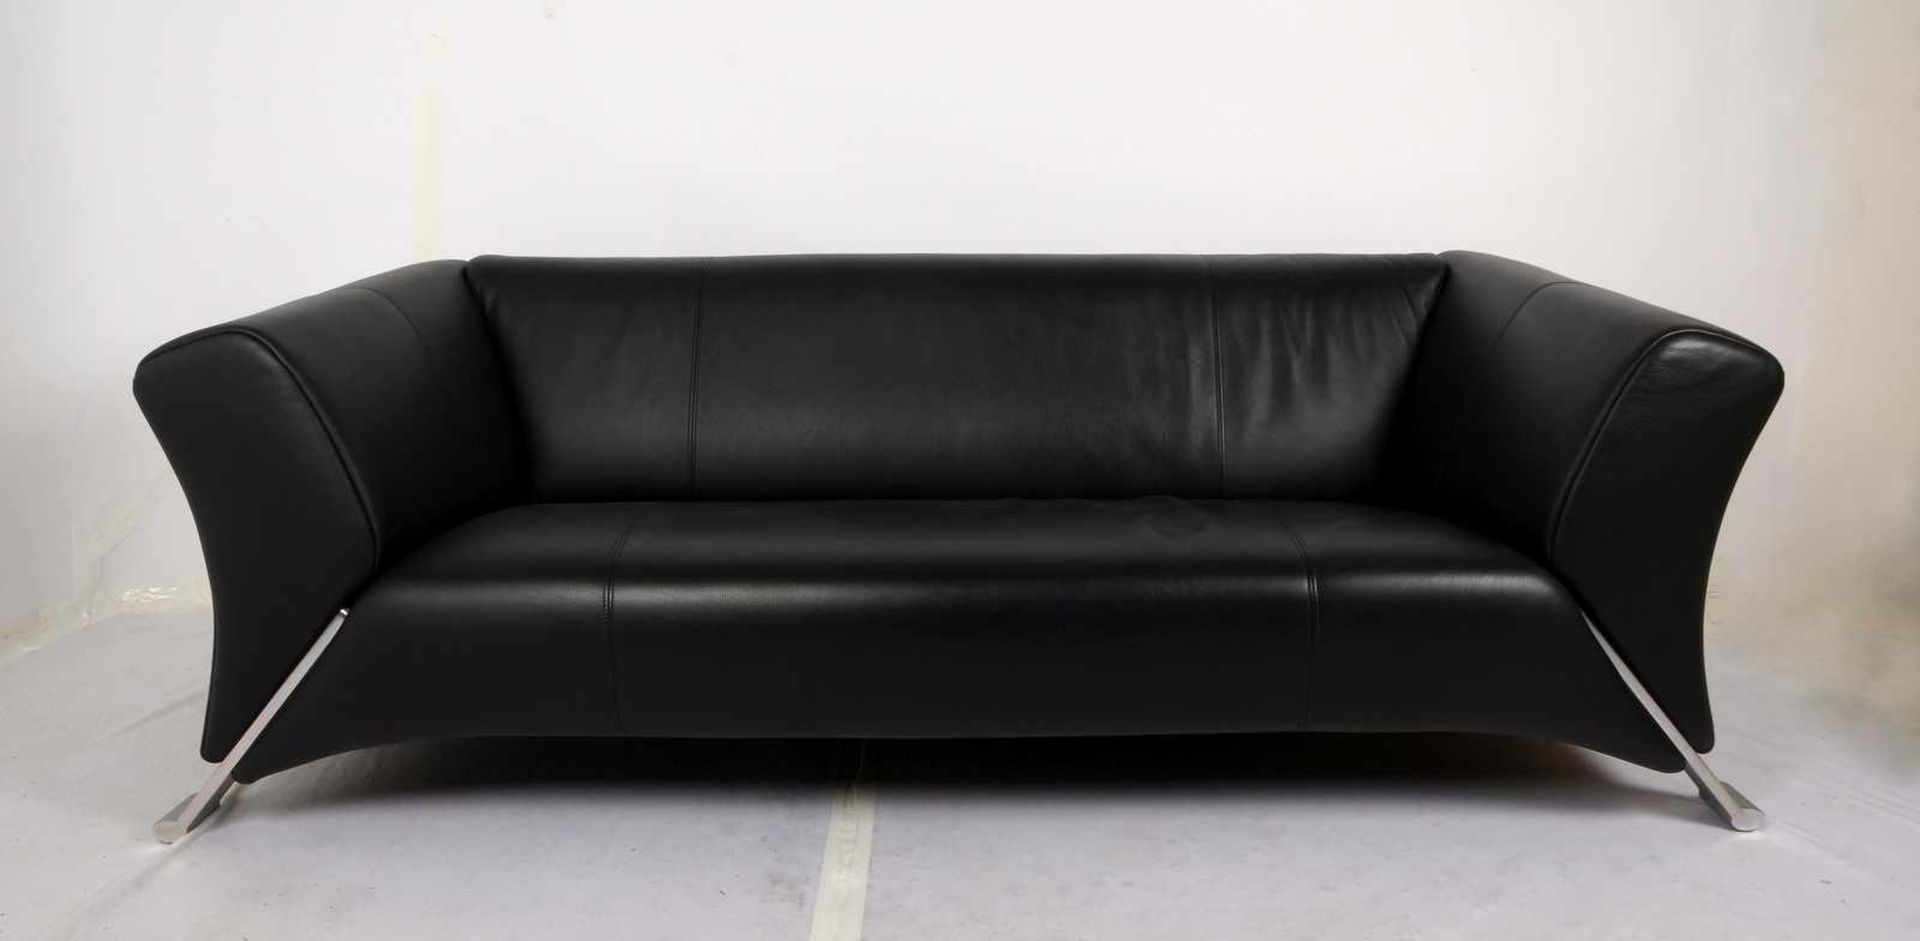 Rolf Benz, Sofa, Design-Klassiker '322', schwarzes Nappaleder, Korpus auf markanten Aluminiumfüßen/